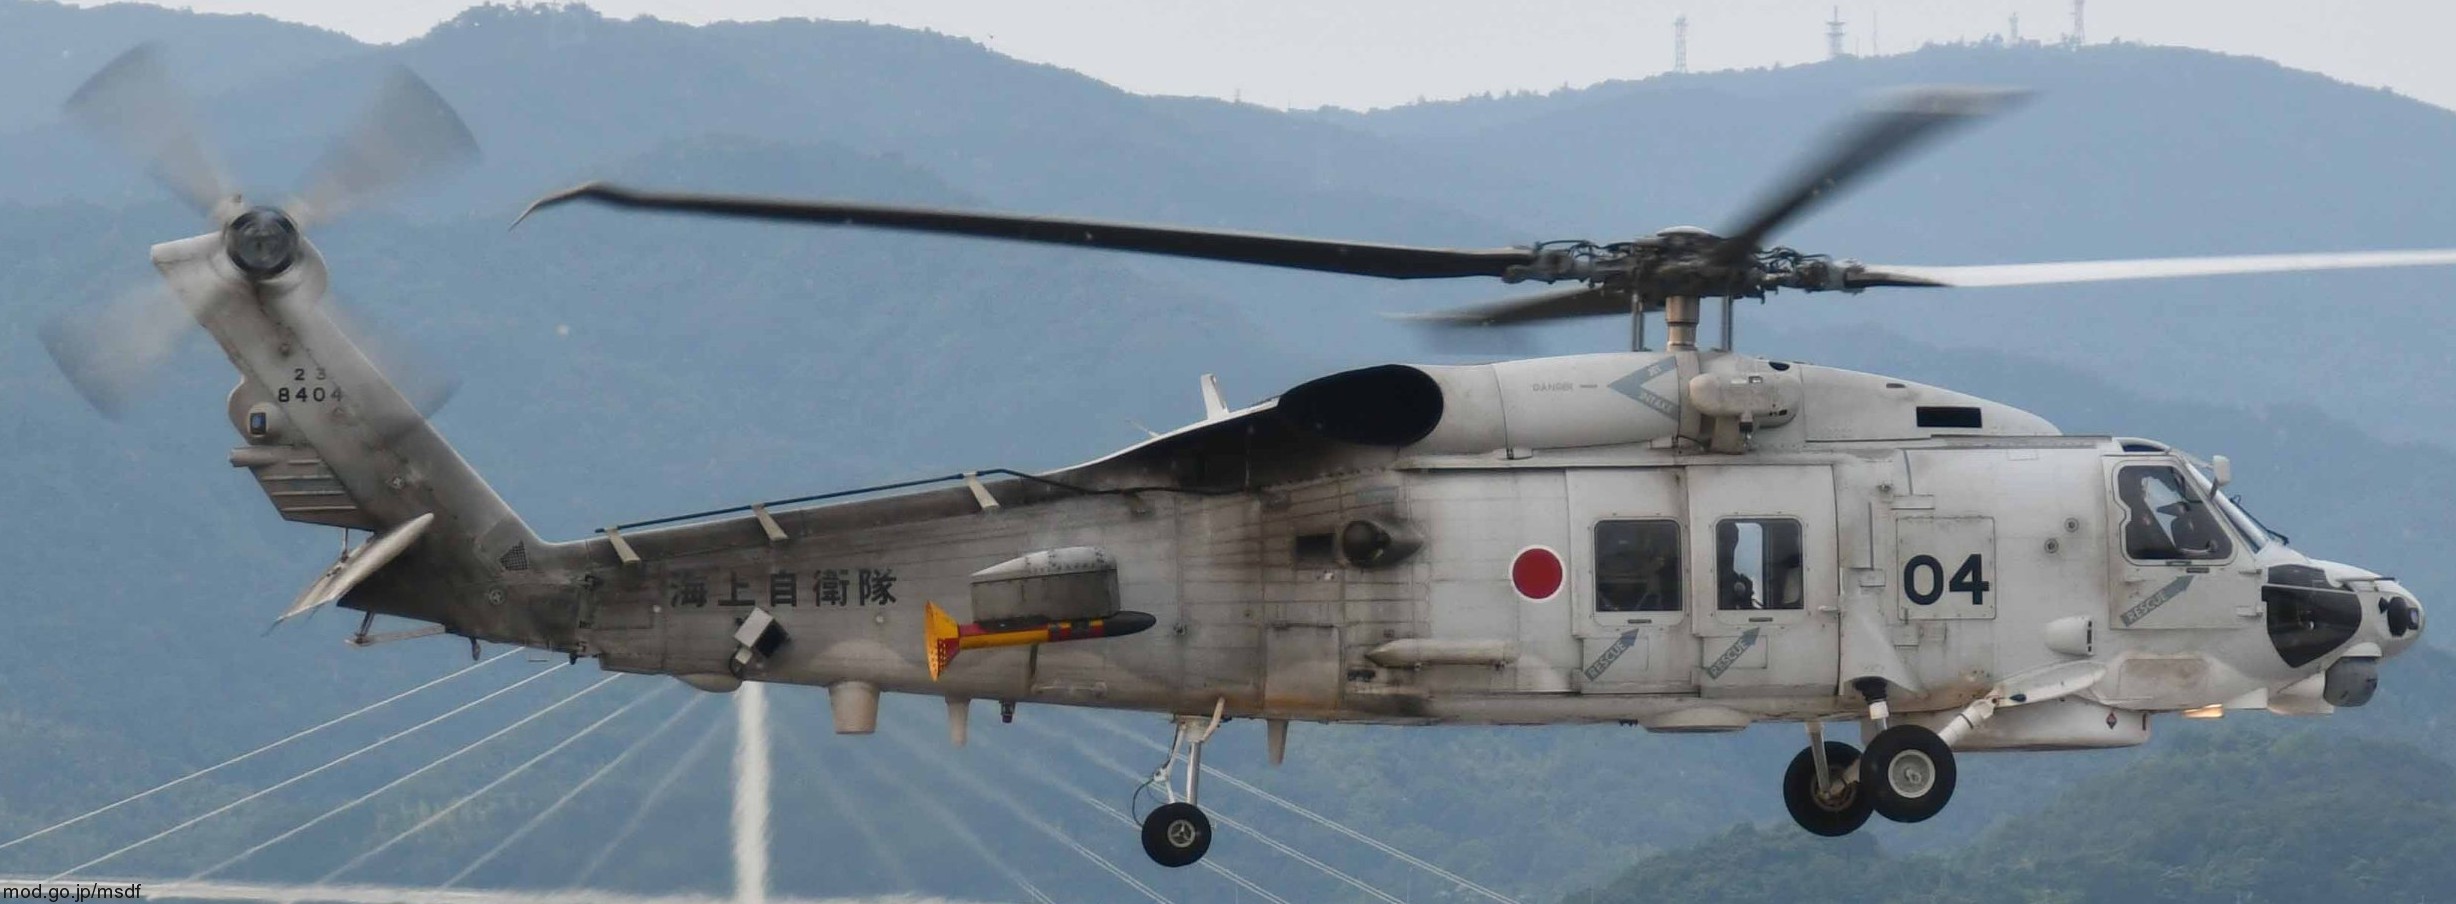 mitsubishi sh-60k helicopter anti submarine japan maritime self defense force jmsdf navy seahawk 8404 02